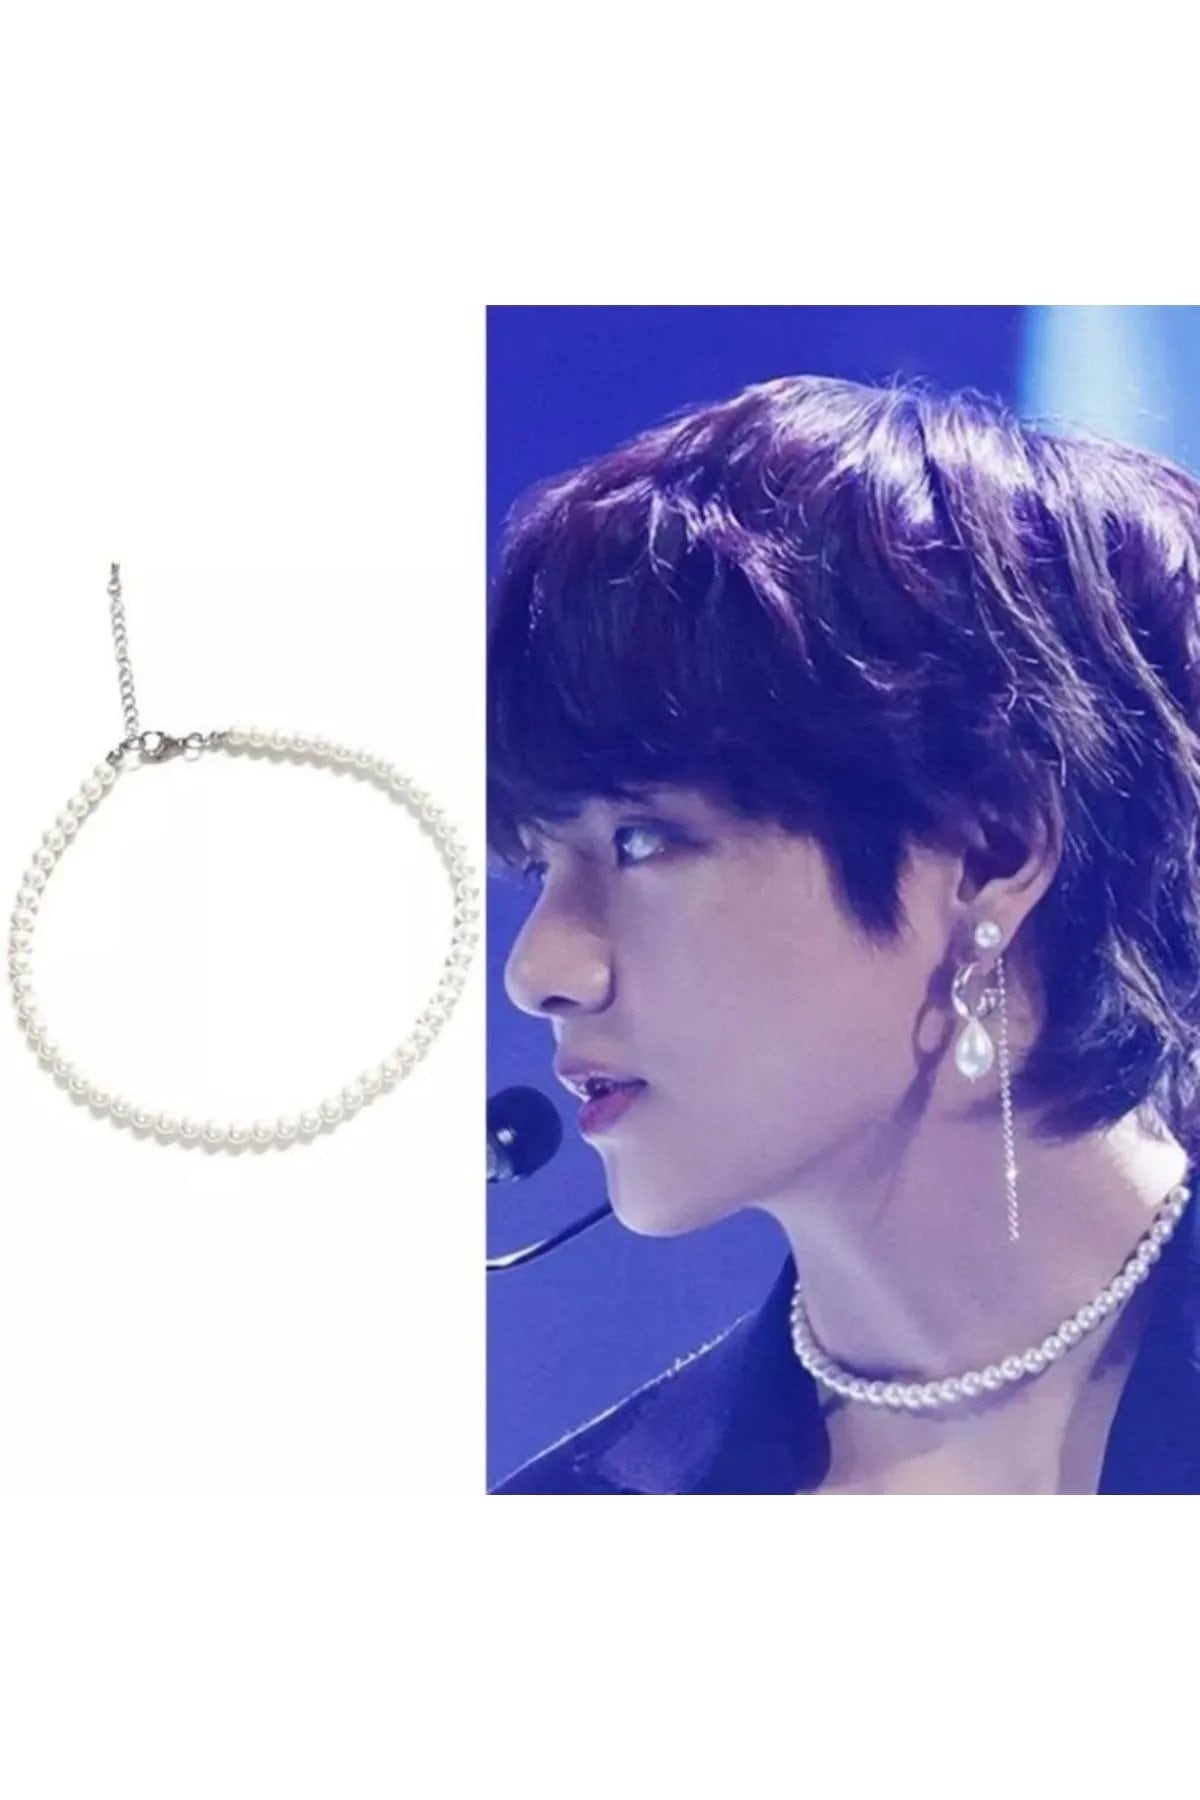 Pearl earrings bts v kim taehyung inspired, beaded vintage retro earring,  BE concept photo, dynamite, korean kpop style